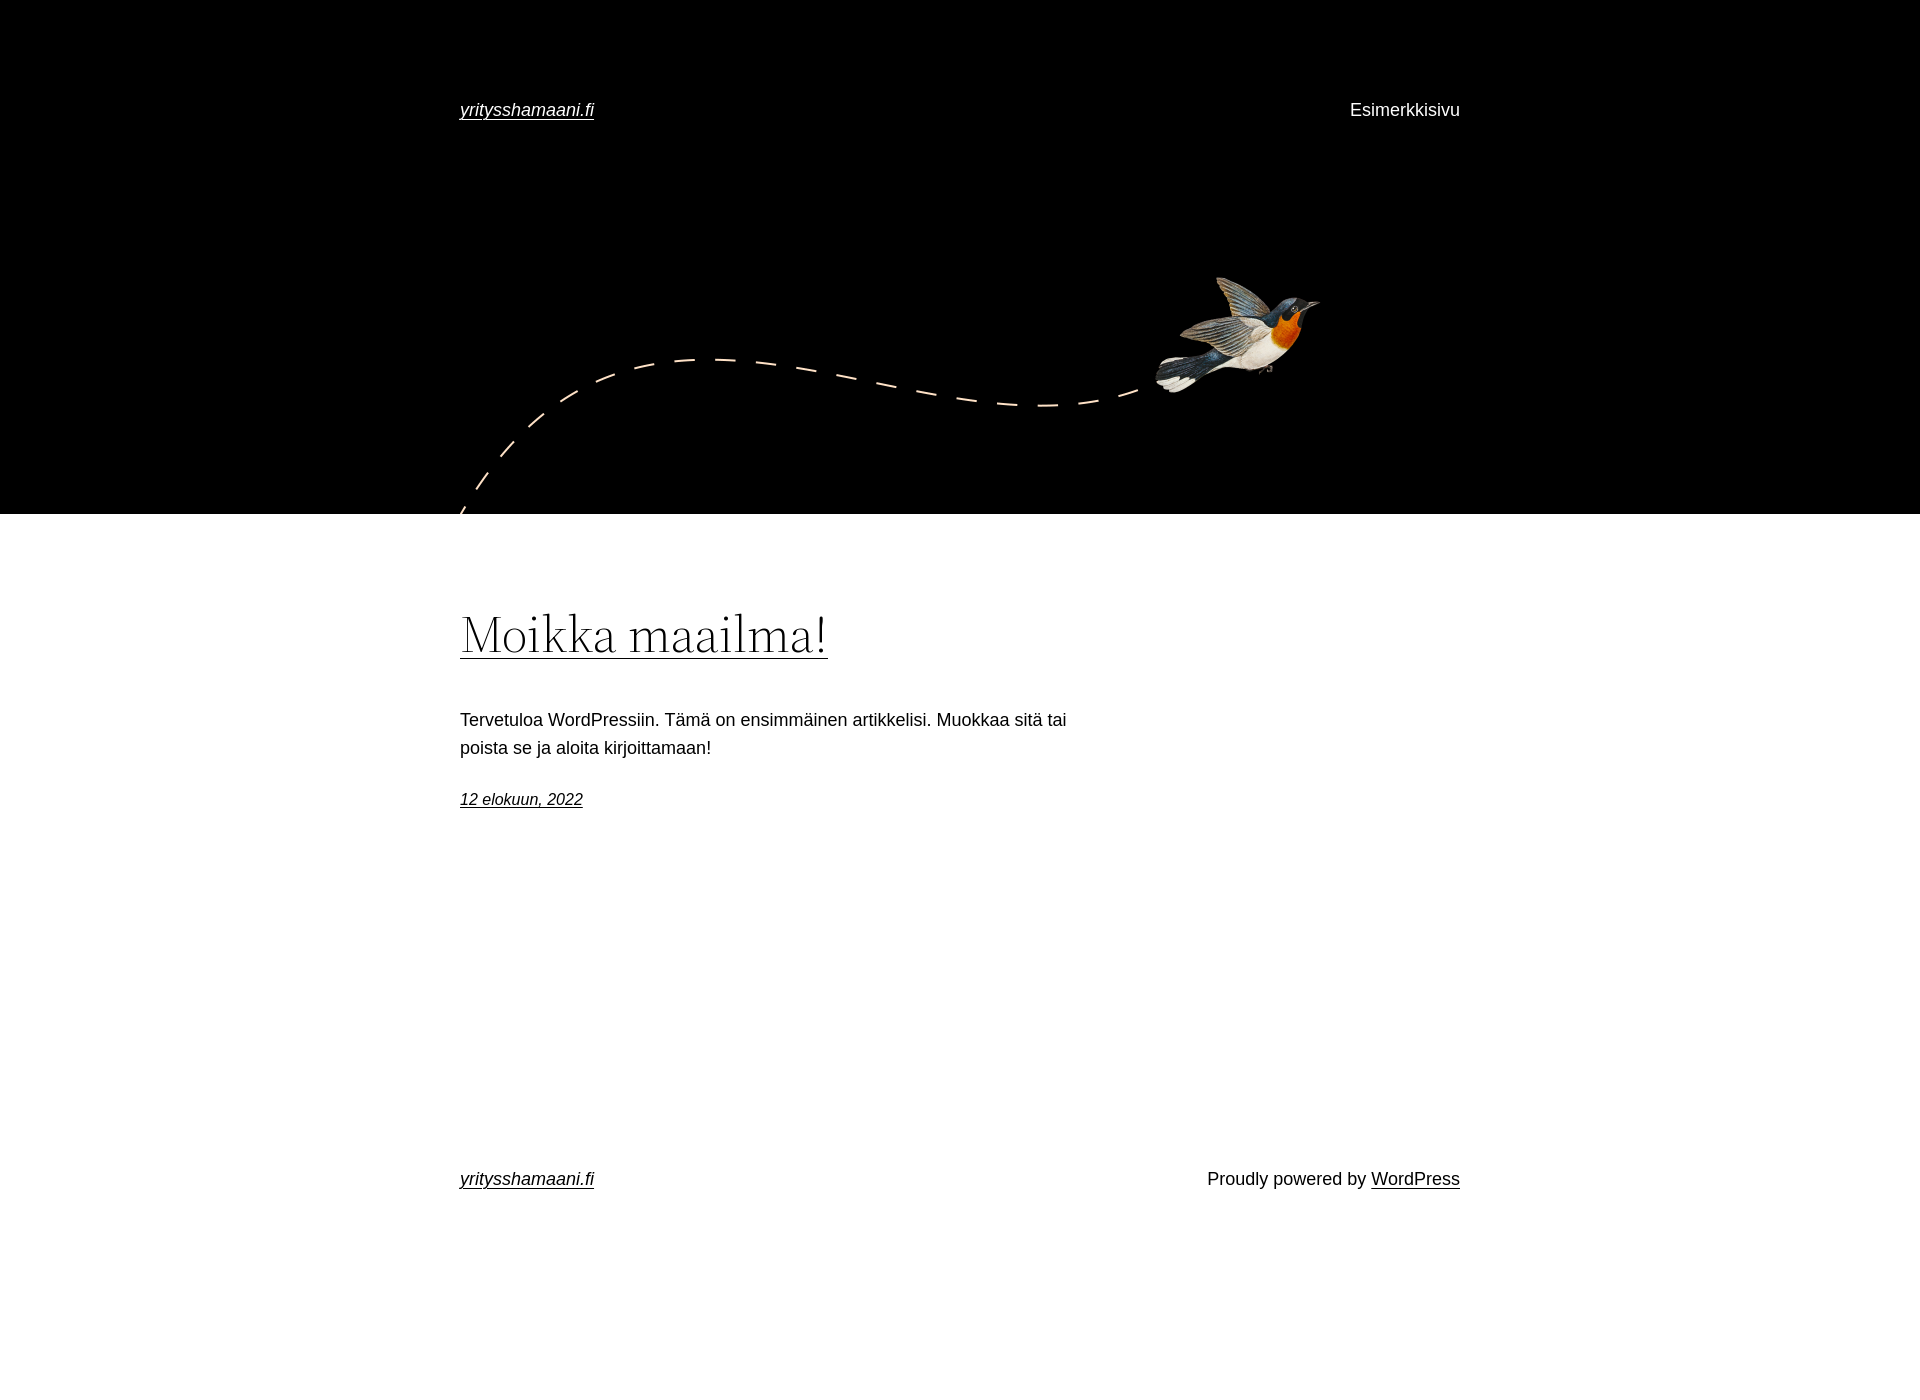 Screenshot for yritysshamaani.fi